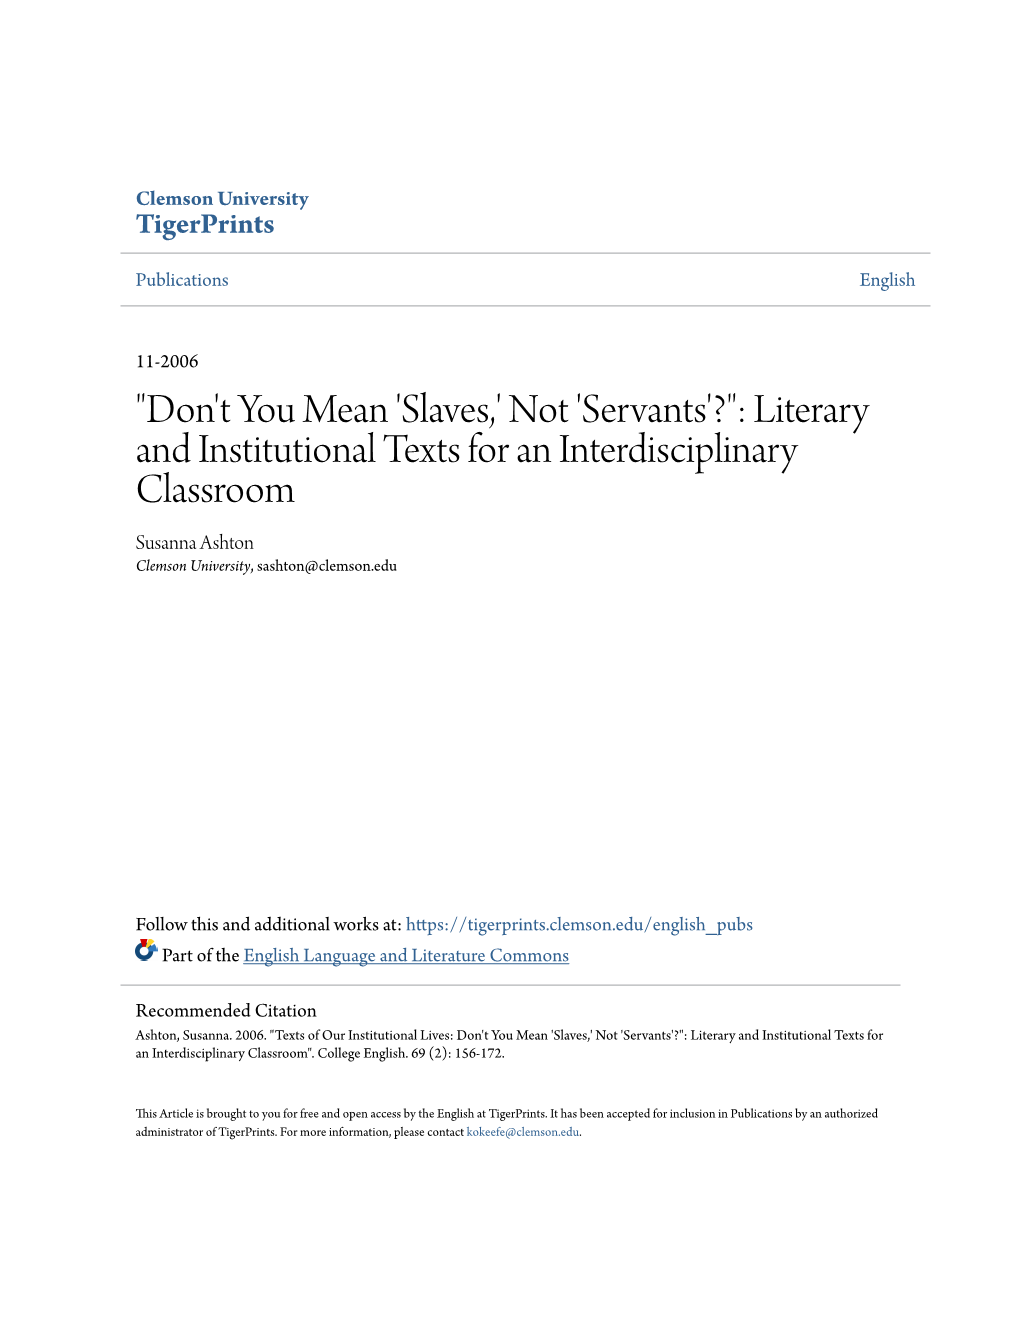 Don't You Mean 'Slaves,' Not 'Servants'?": Literary and Institutional Texts for an Interdisciplinary Classroom Susanna Ashton Clemson University, Sashton@Clemson.Edu